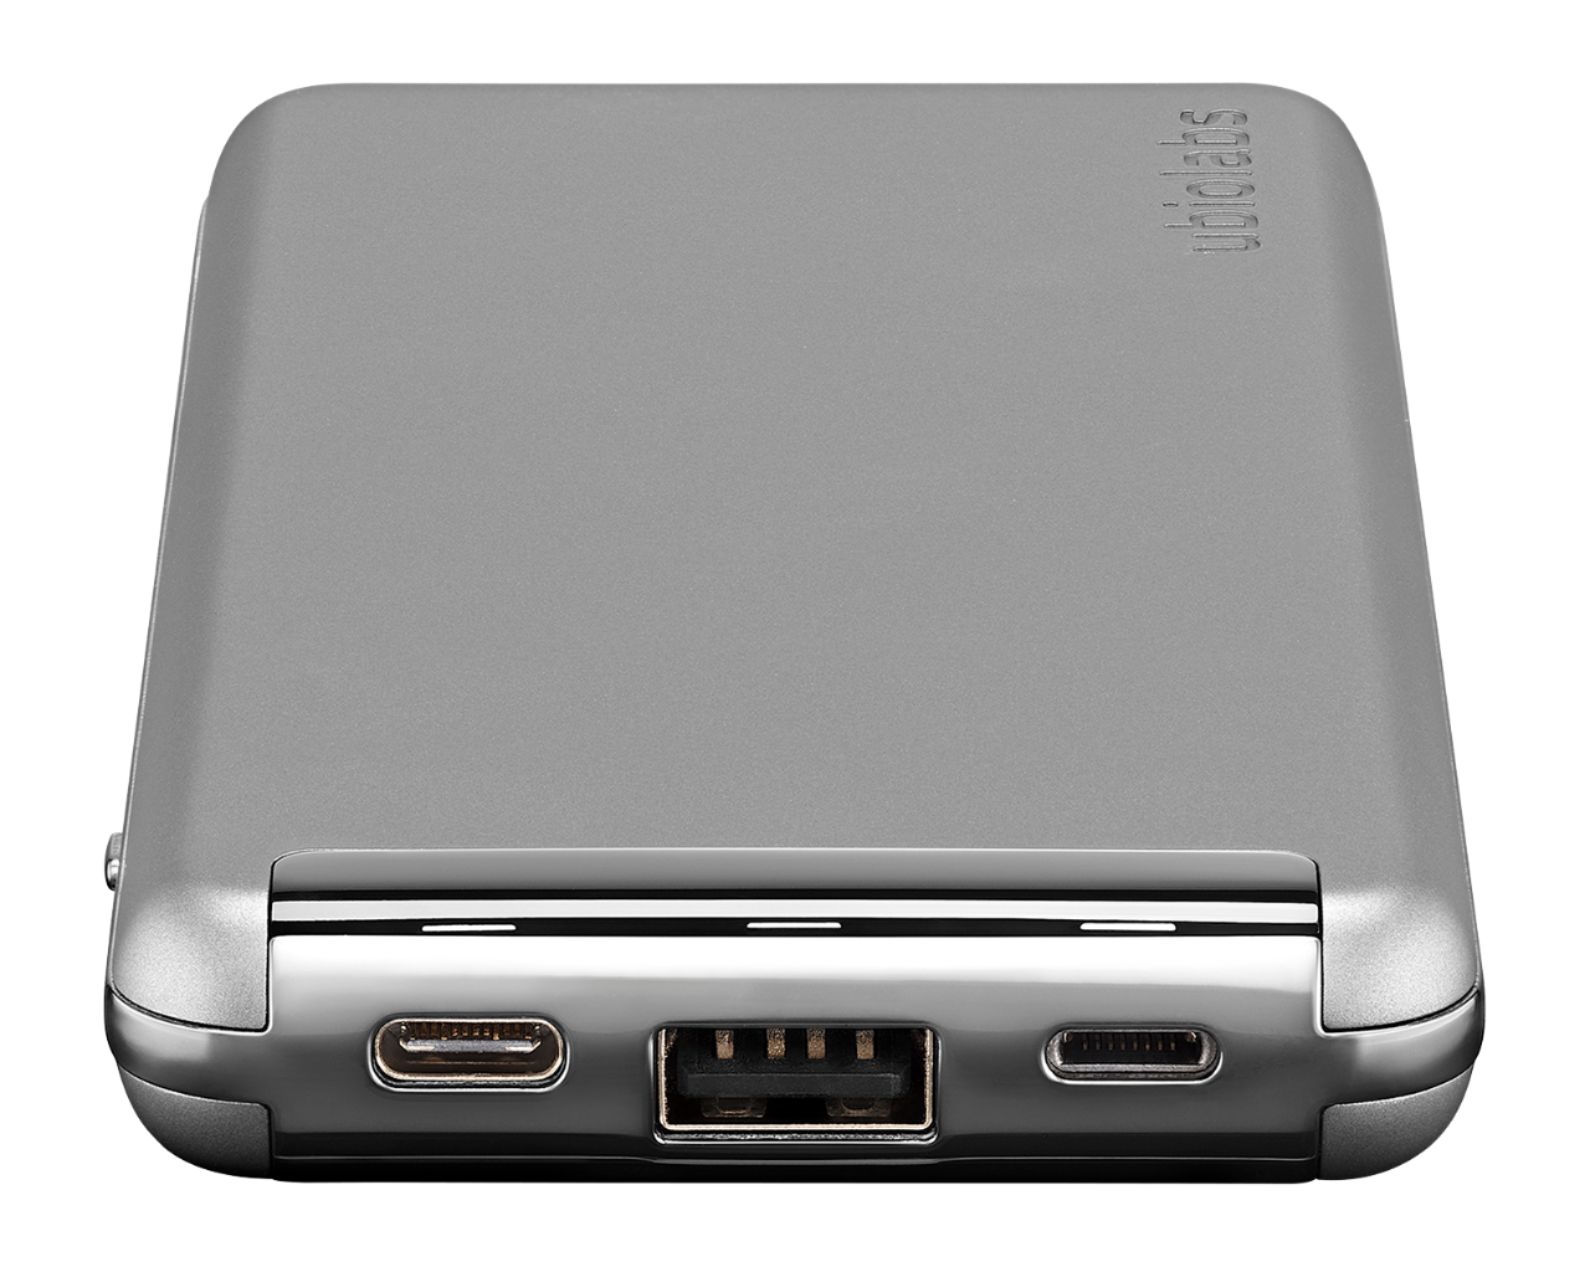 Ubio Labs 10,000 mAh Portable Portable Power Bank Made for iPhone / iPad /  iPod